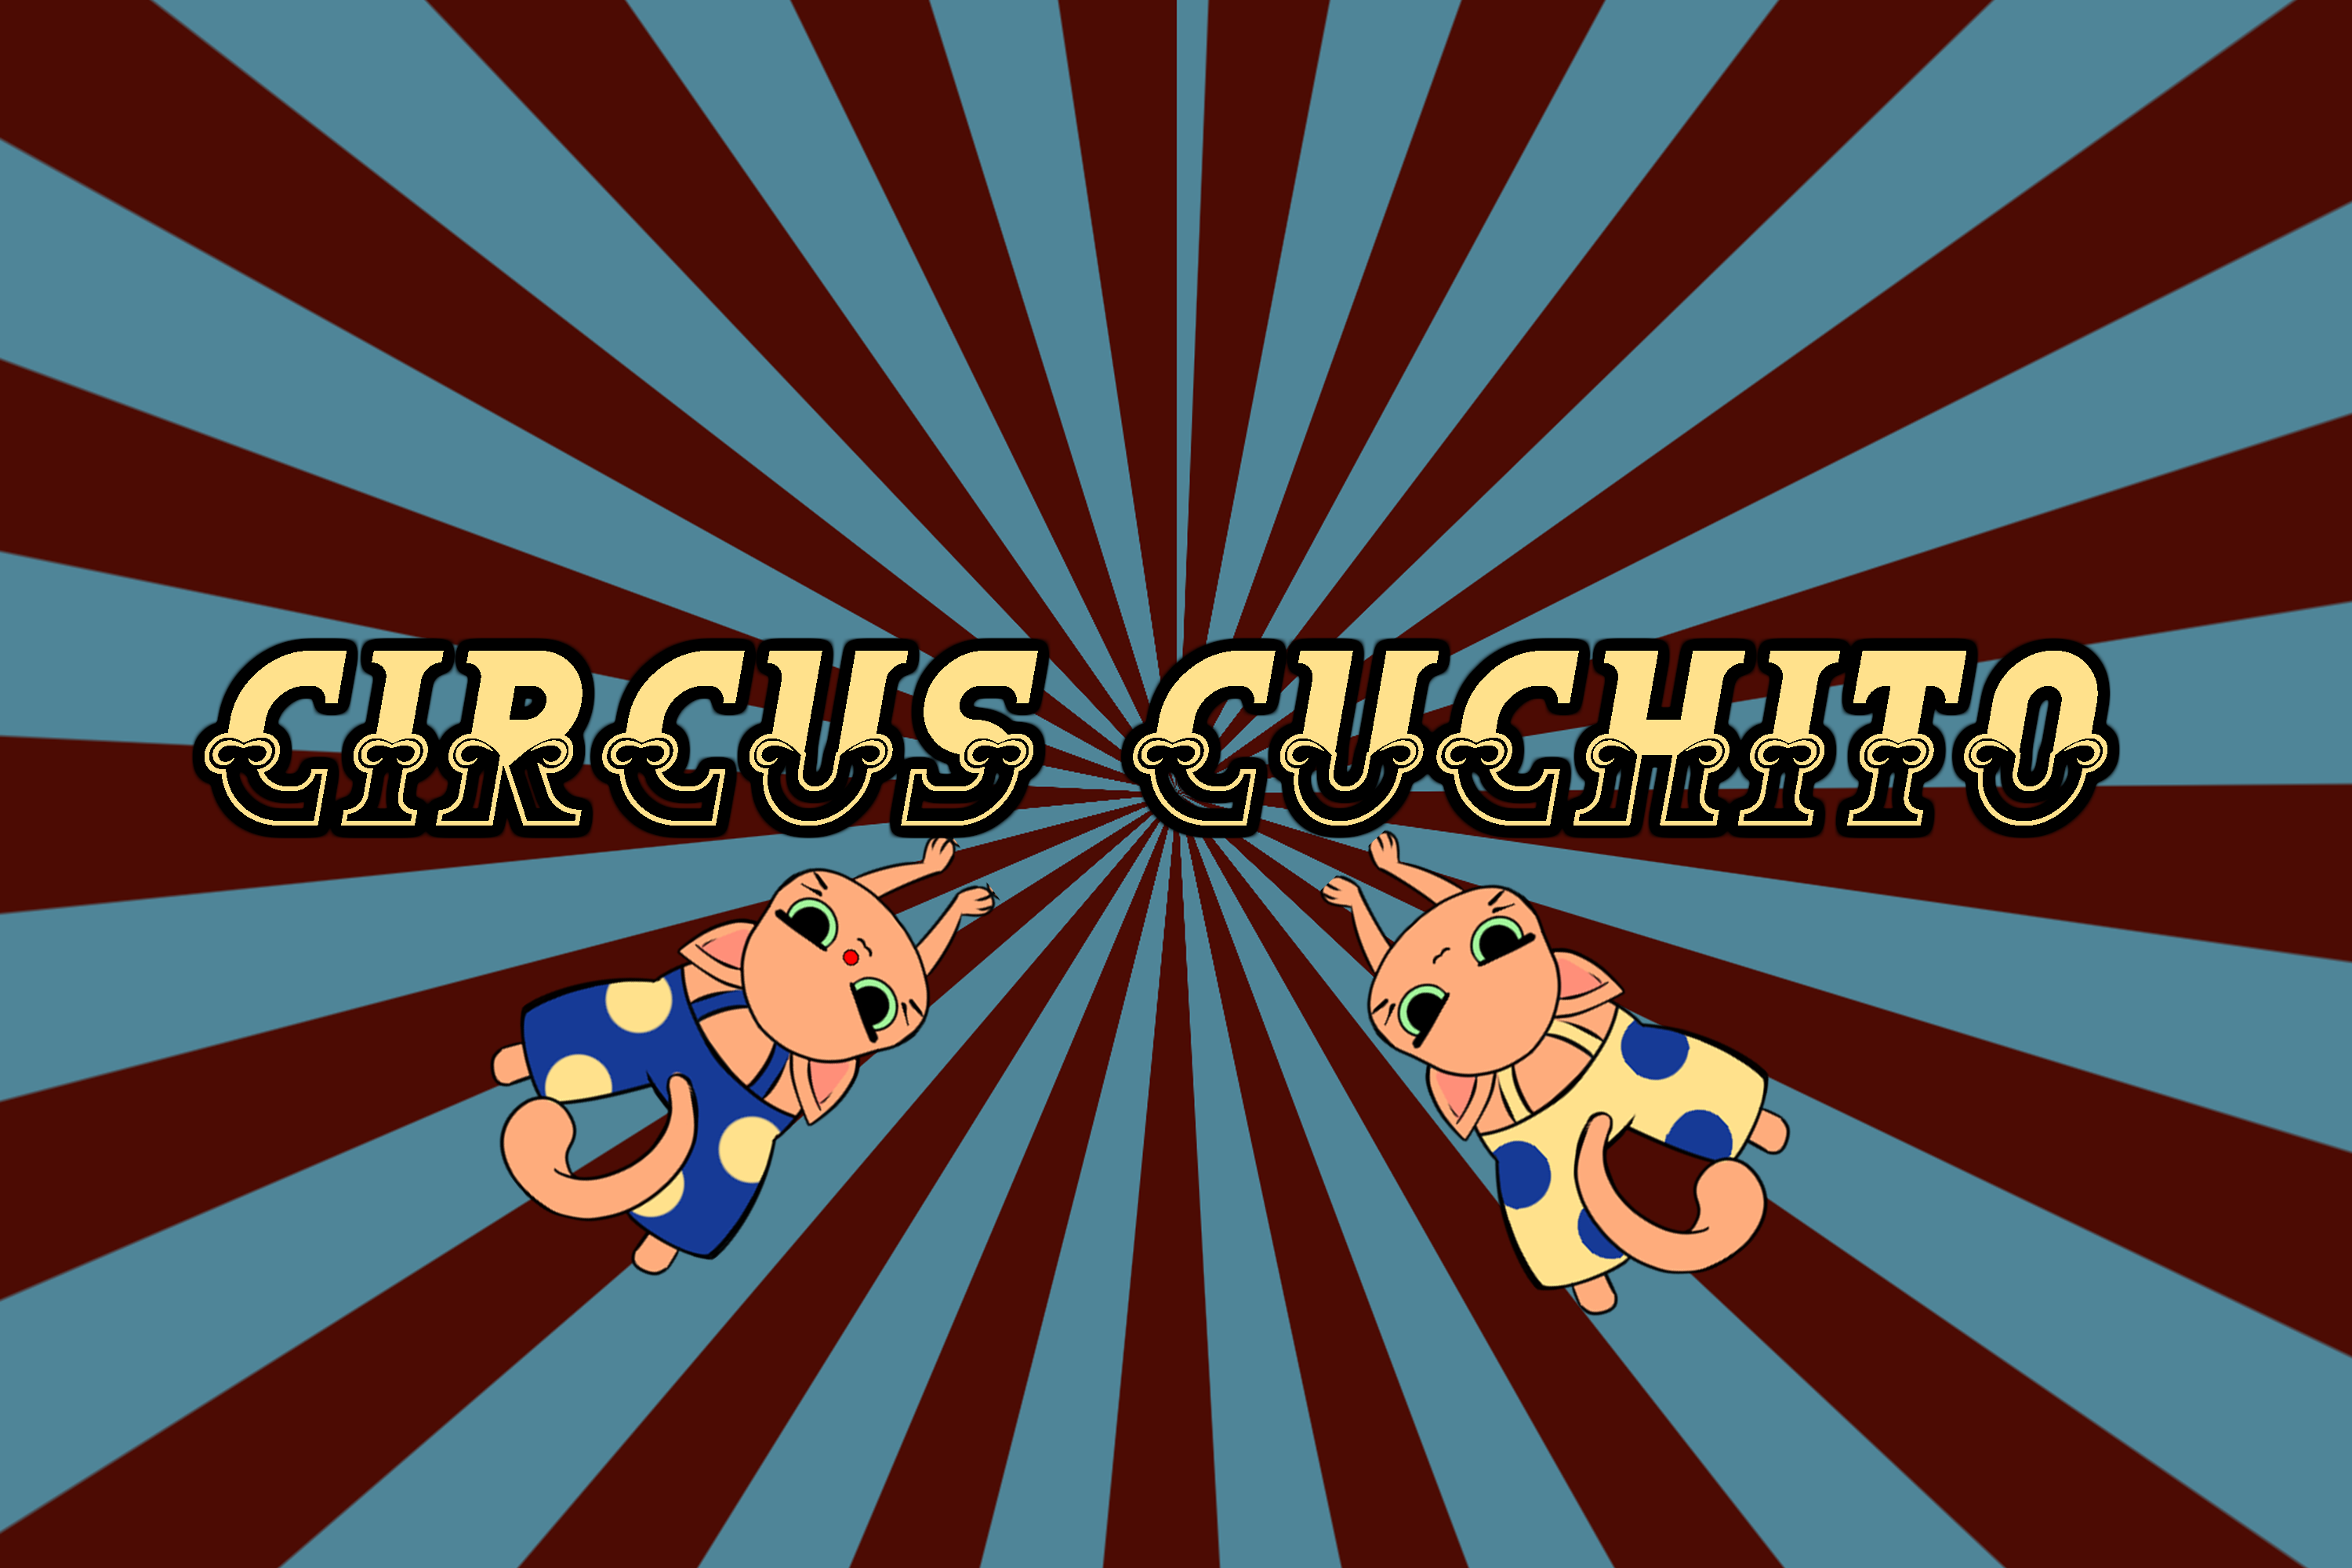 Circus Cuchito